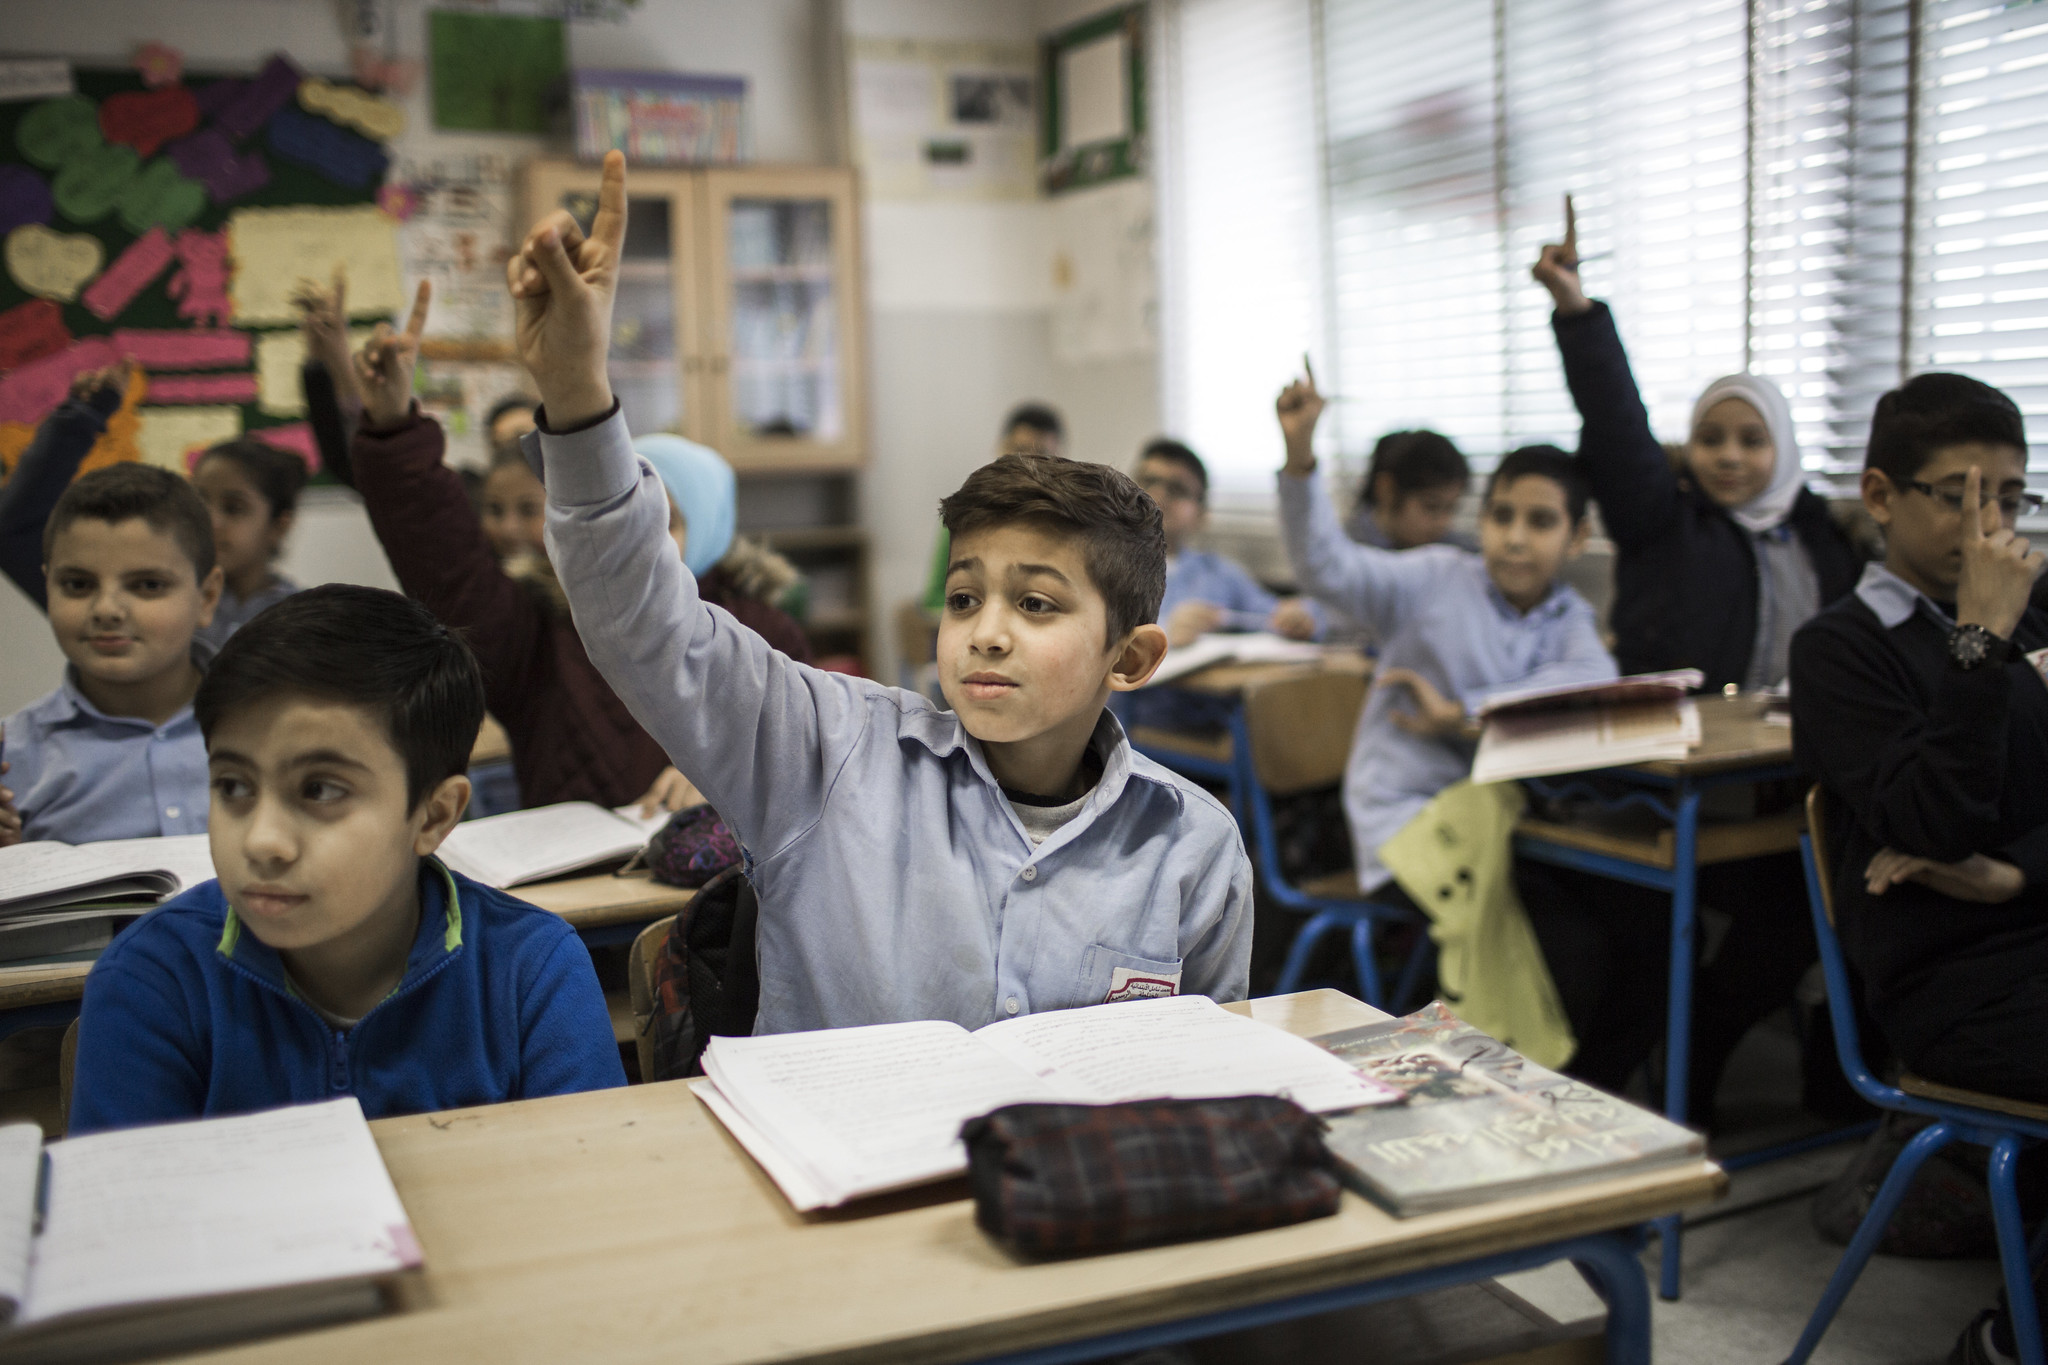 Syrian children in class room raising hands